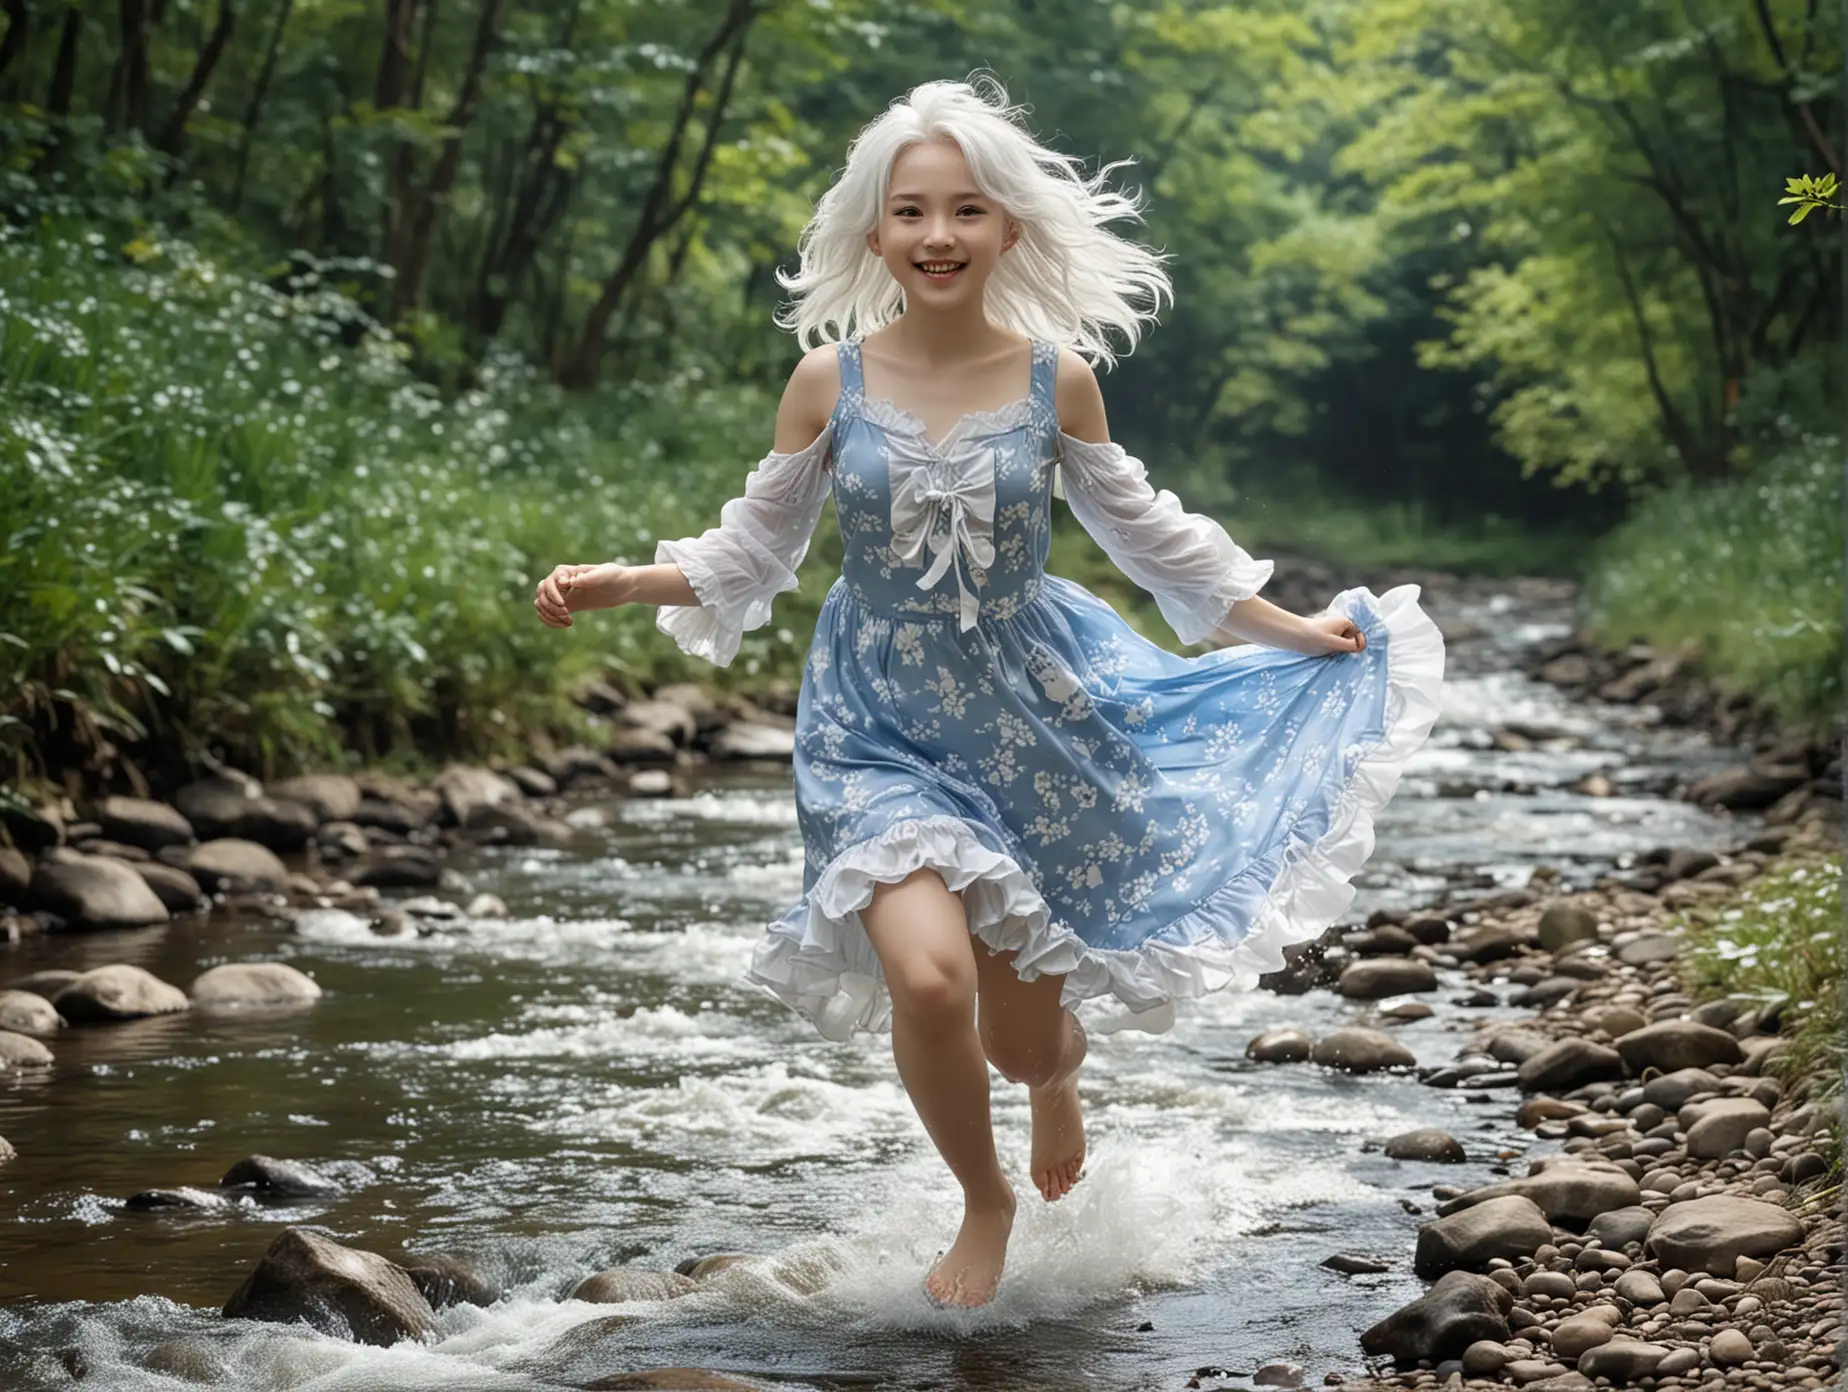 Goddess-of-Running-Water-Cheerful-Young-Girl-in-BlueandWhite-Dress-Running-Along-Stream